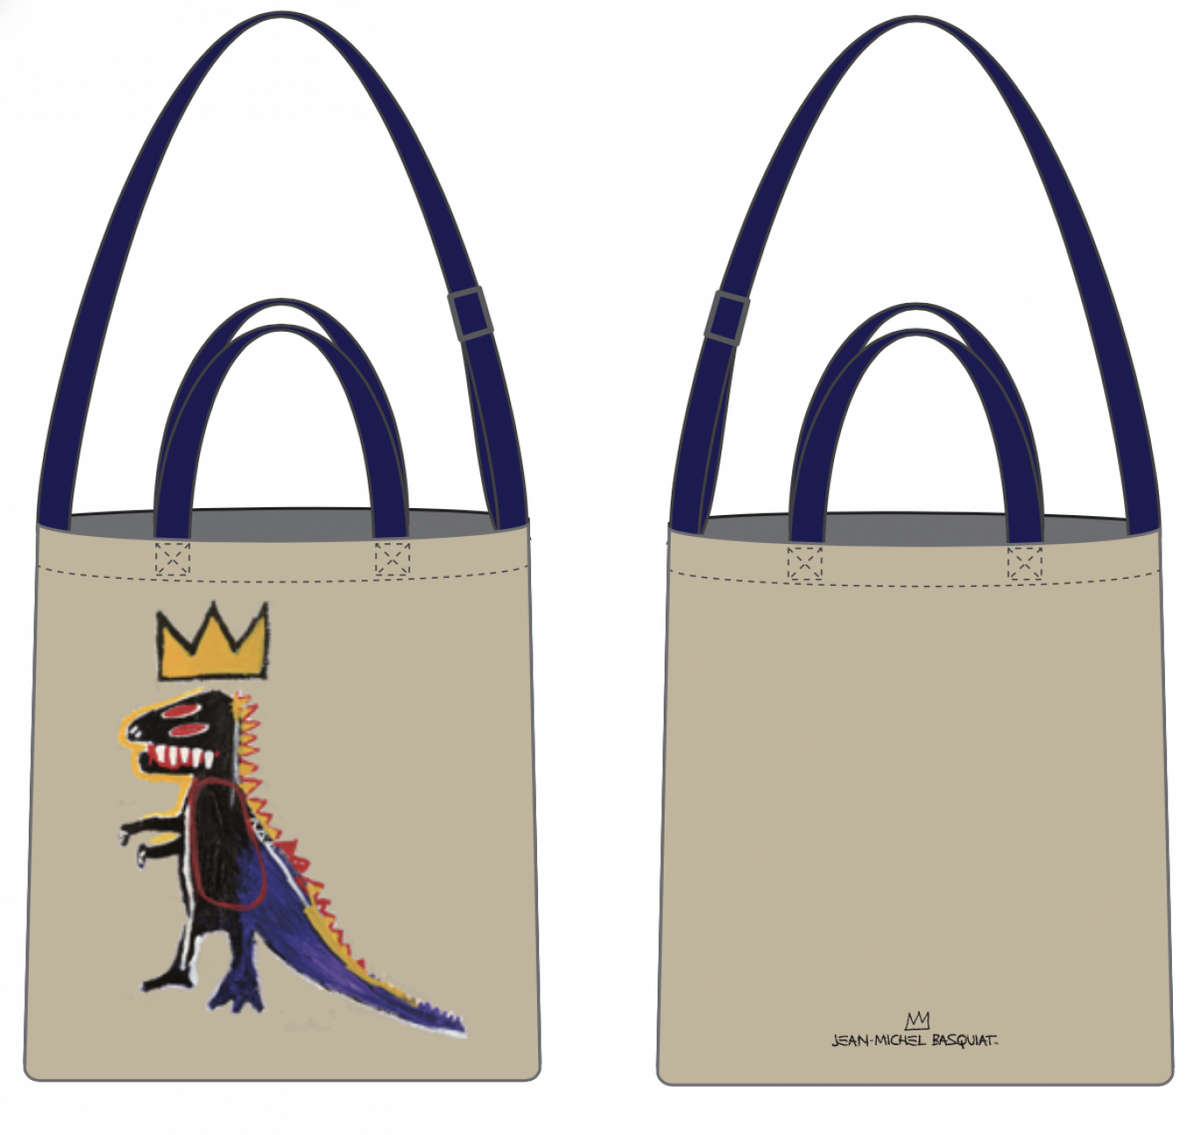 Basquiat Pez Dispenser Crossbody Bag